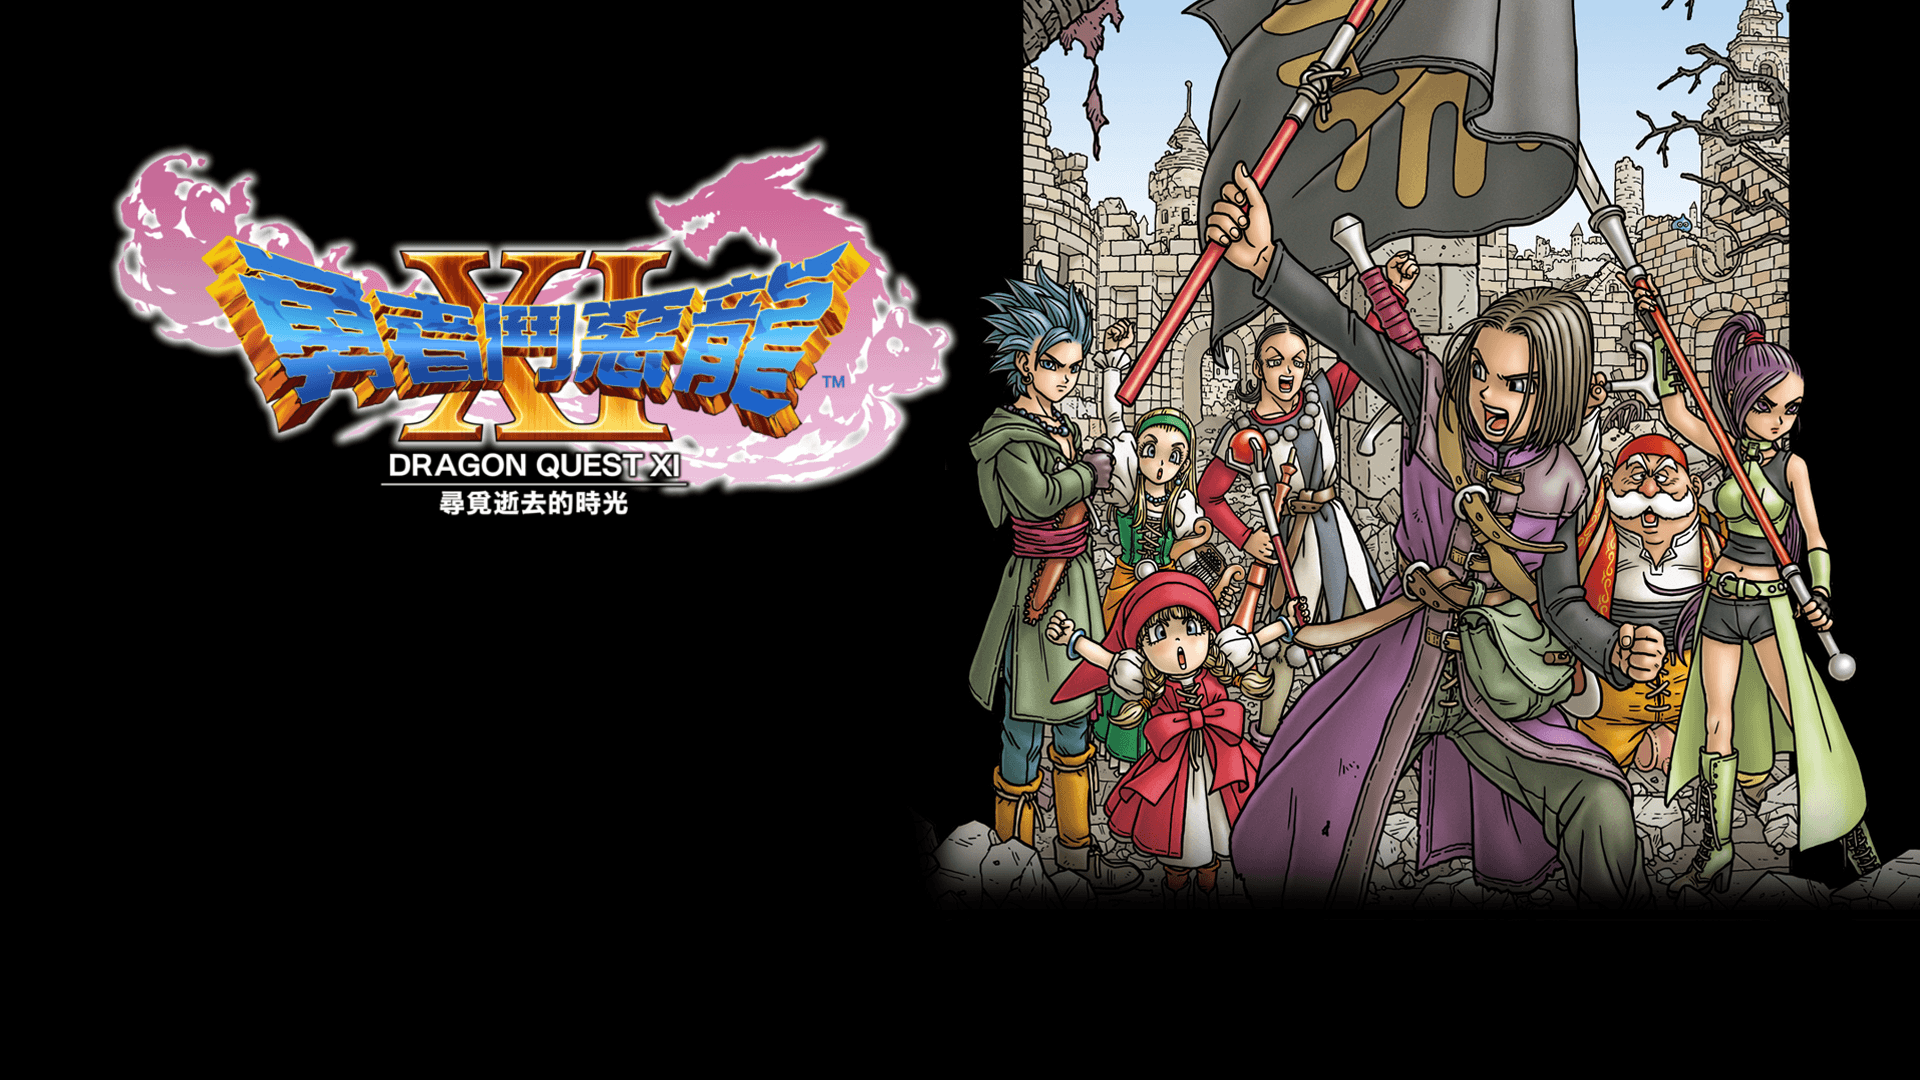 Wallpaper ID 428555  Video Game Dragon Quest XI Phone Wallpaper   750x1334 free download